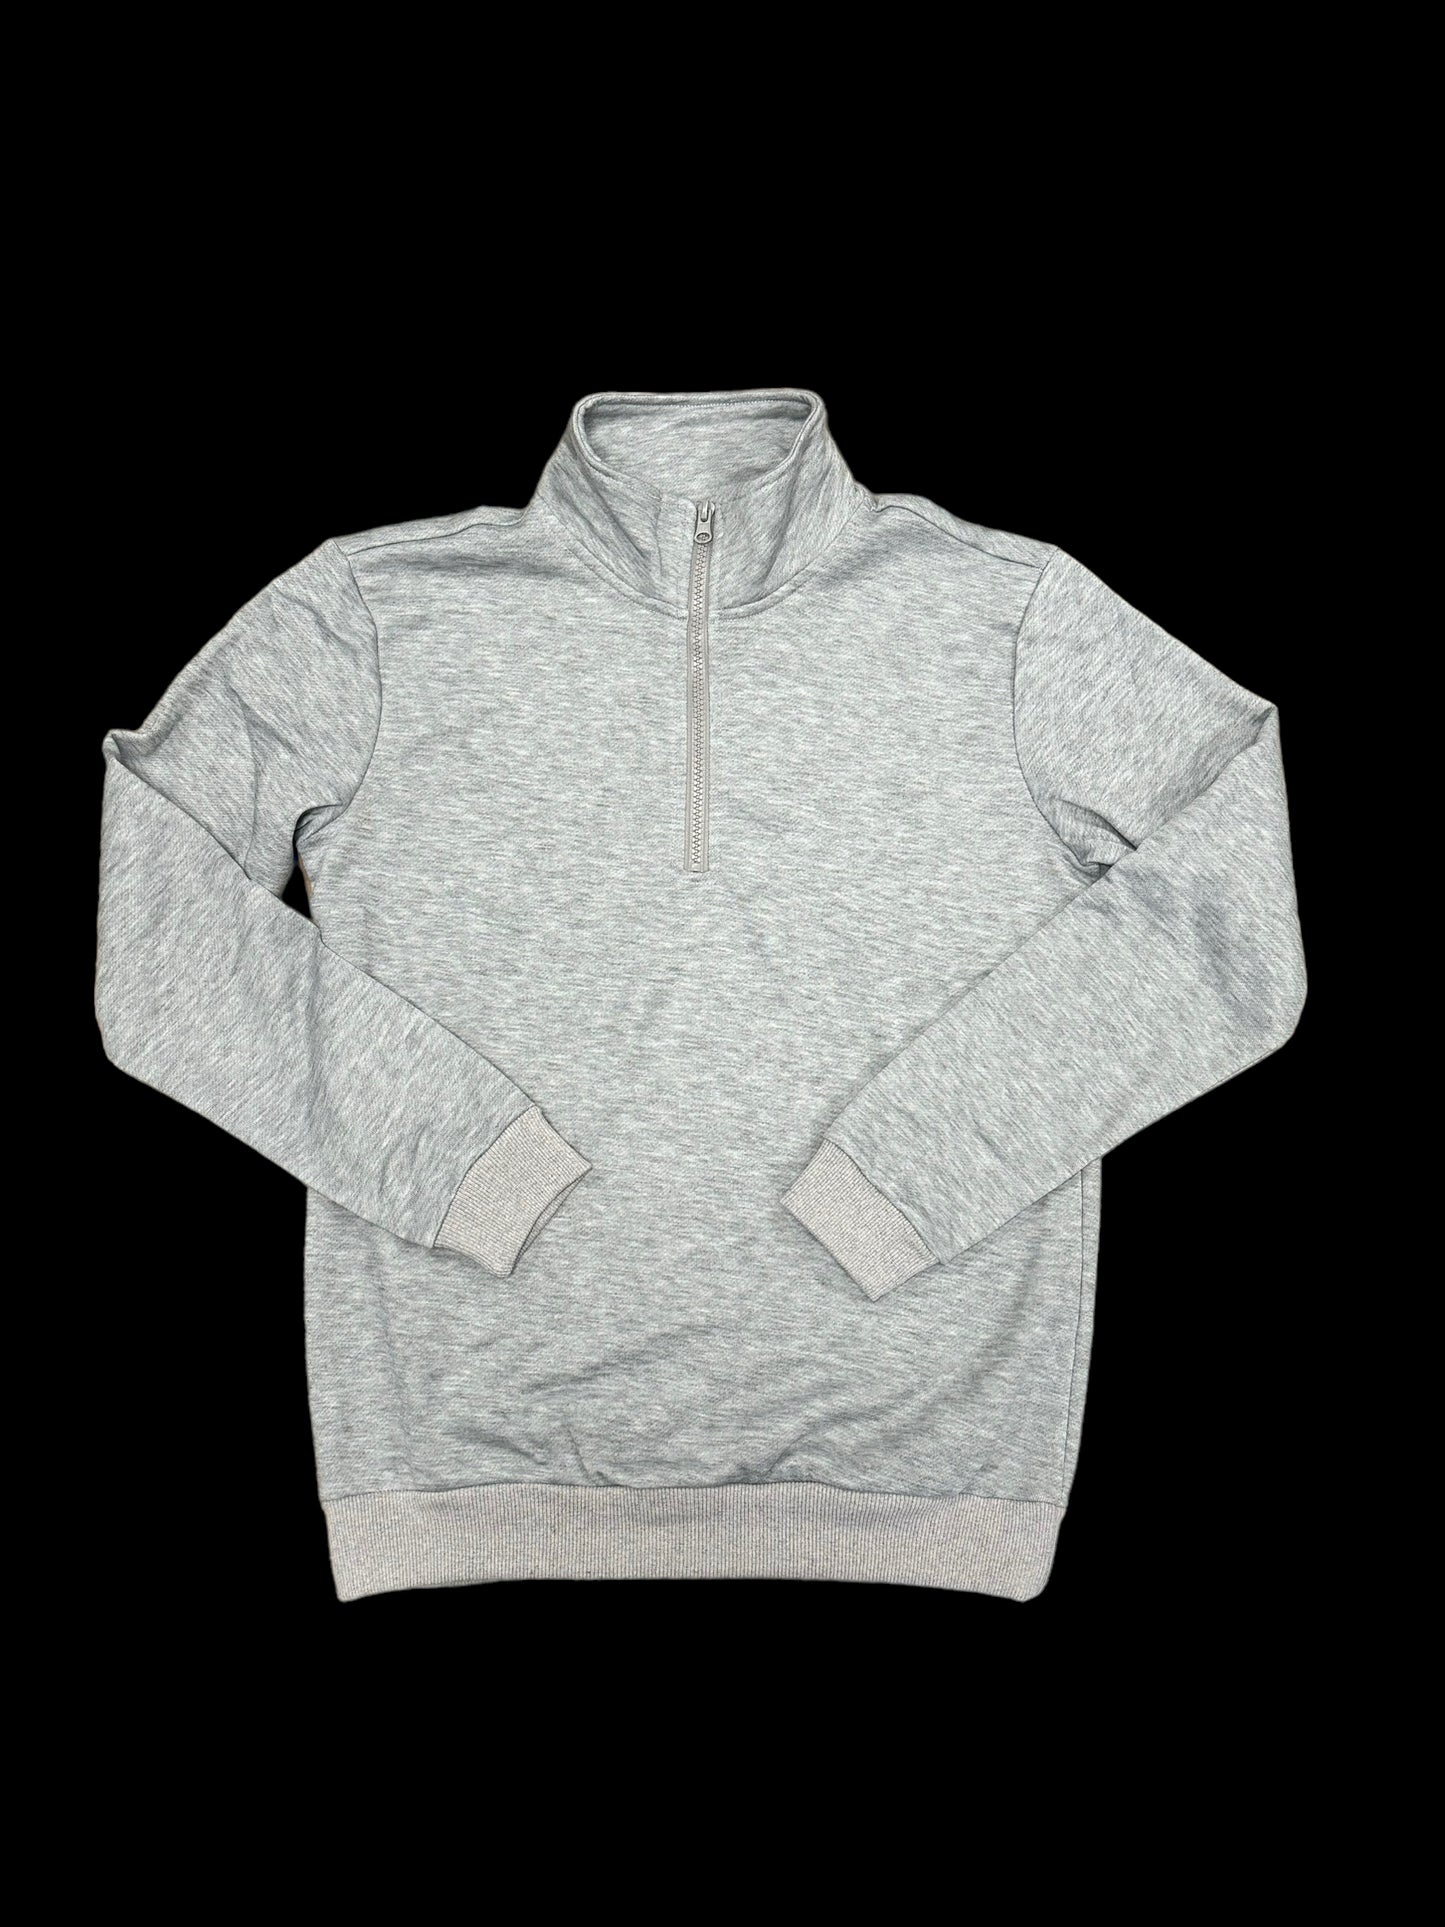 Adult Unisex 1/4 Zip Sweatshirt Sublimation